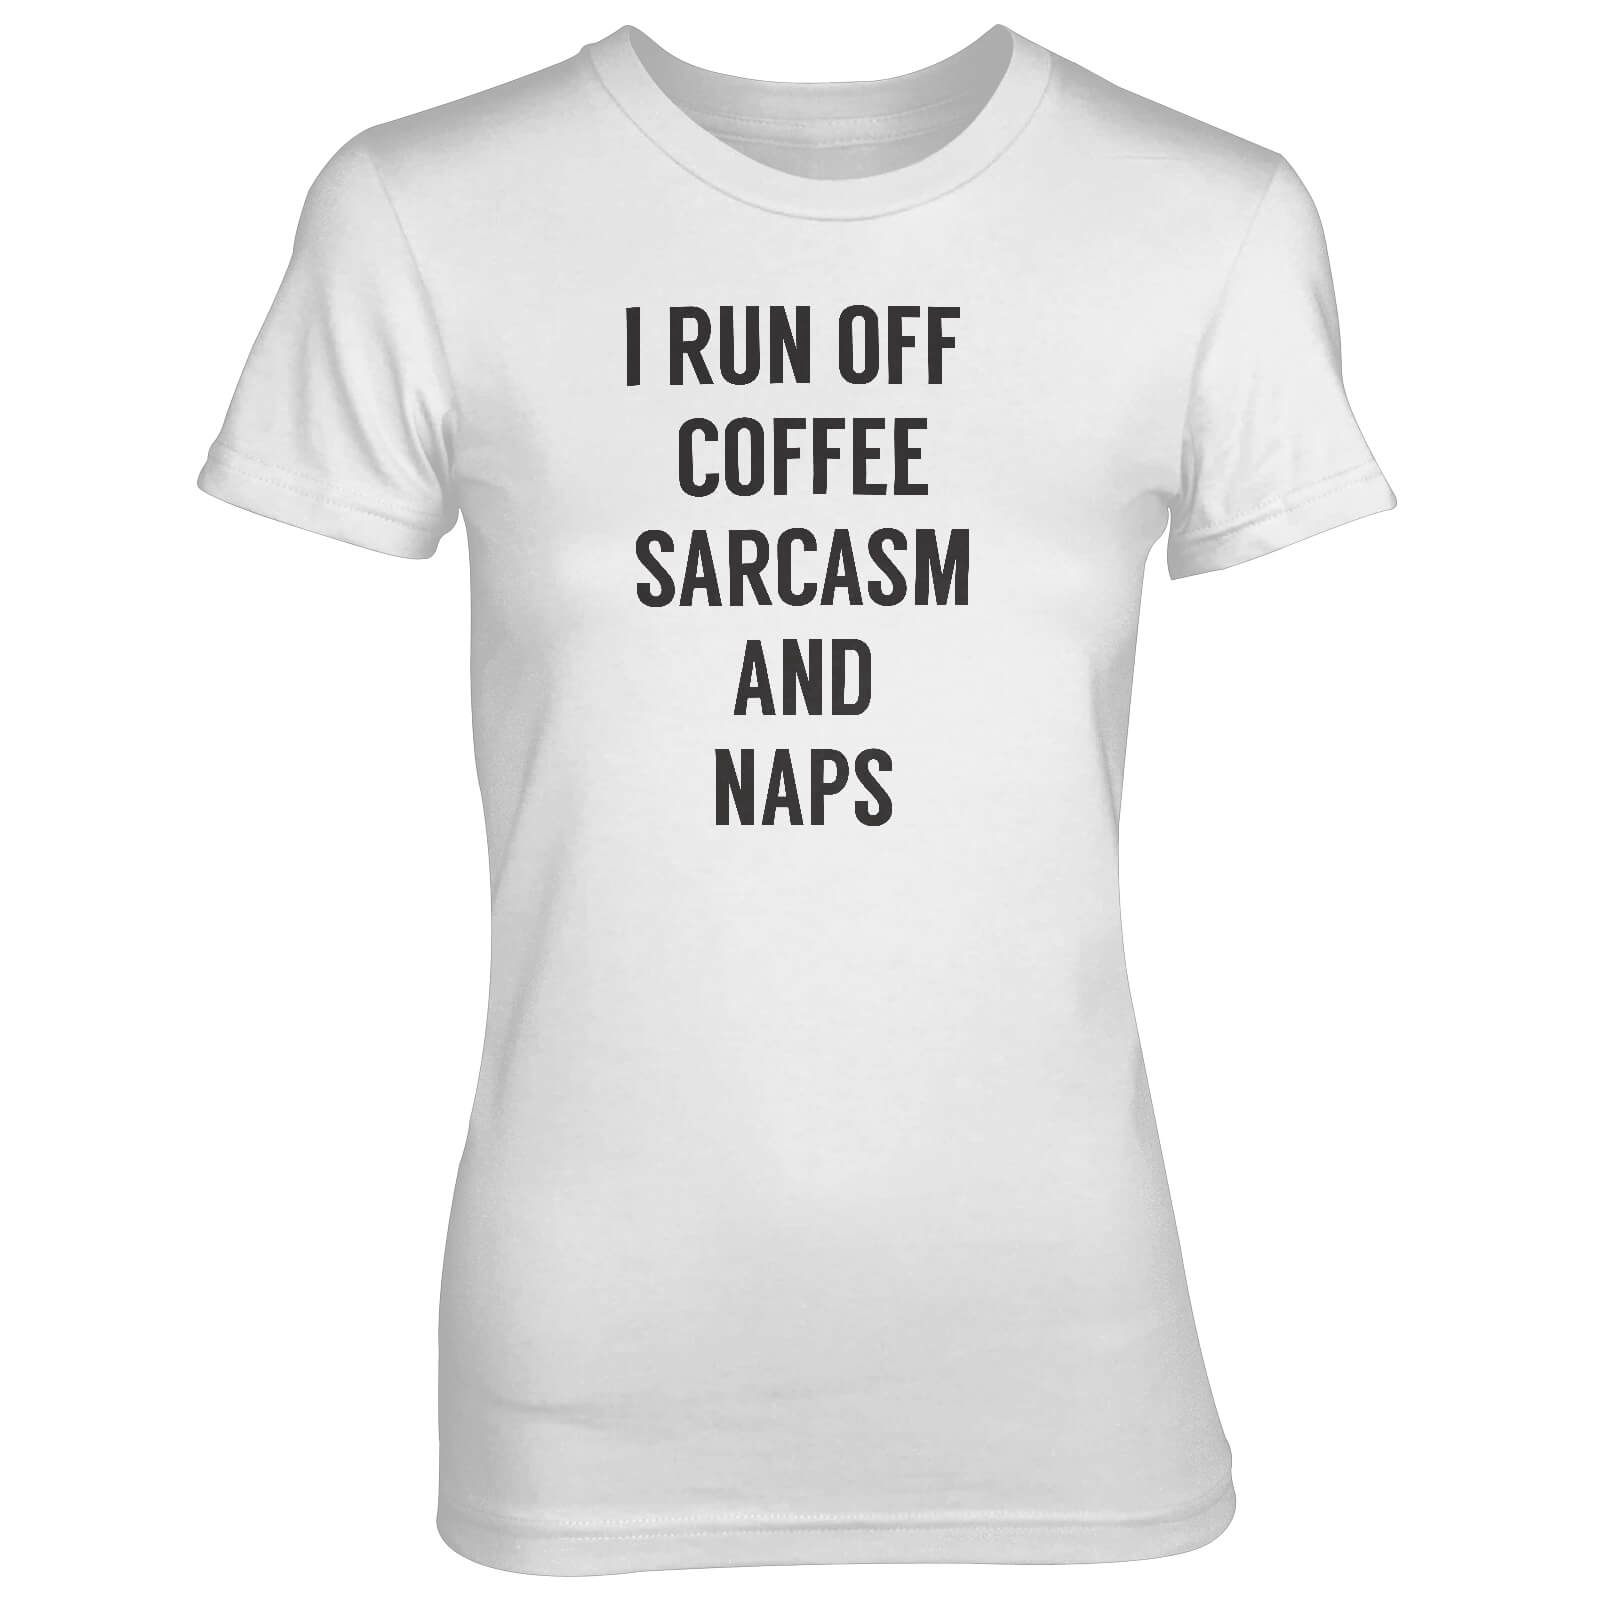 I Run Off Coffee Sarcasm And Naps Women's White T-Shirt - S - White